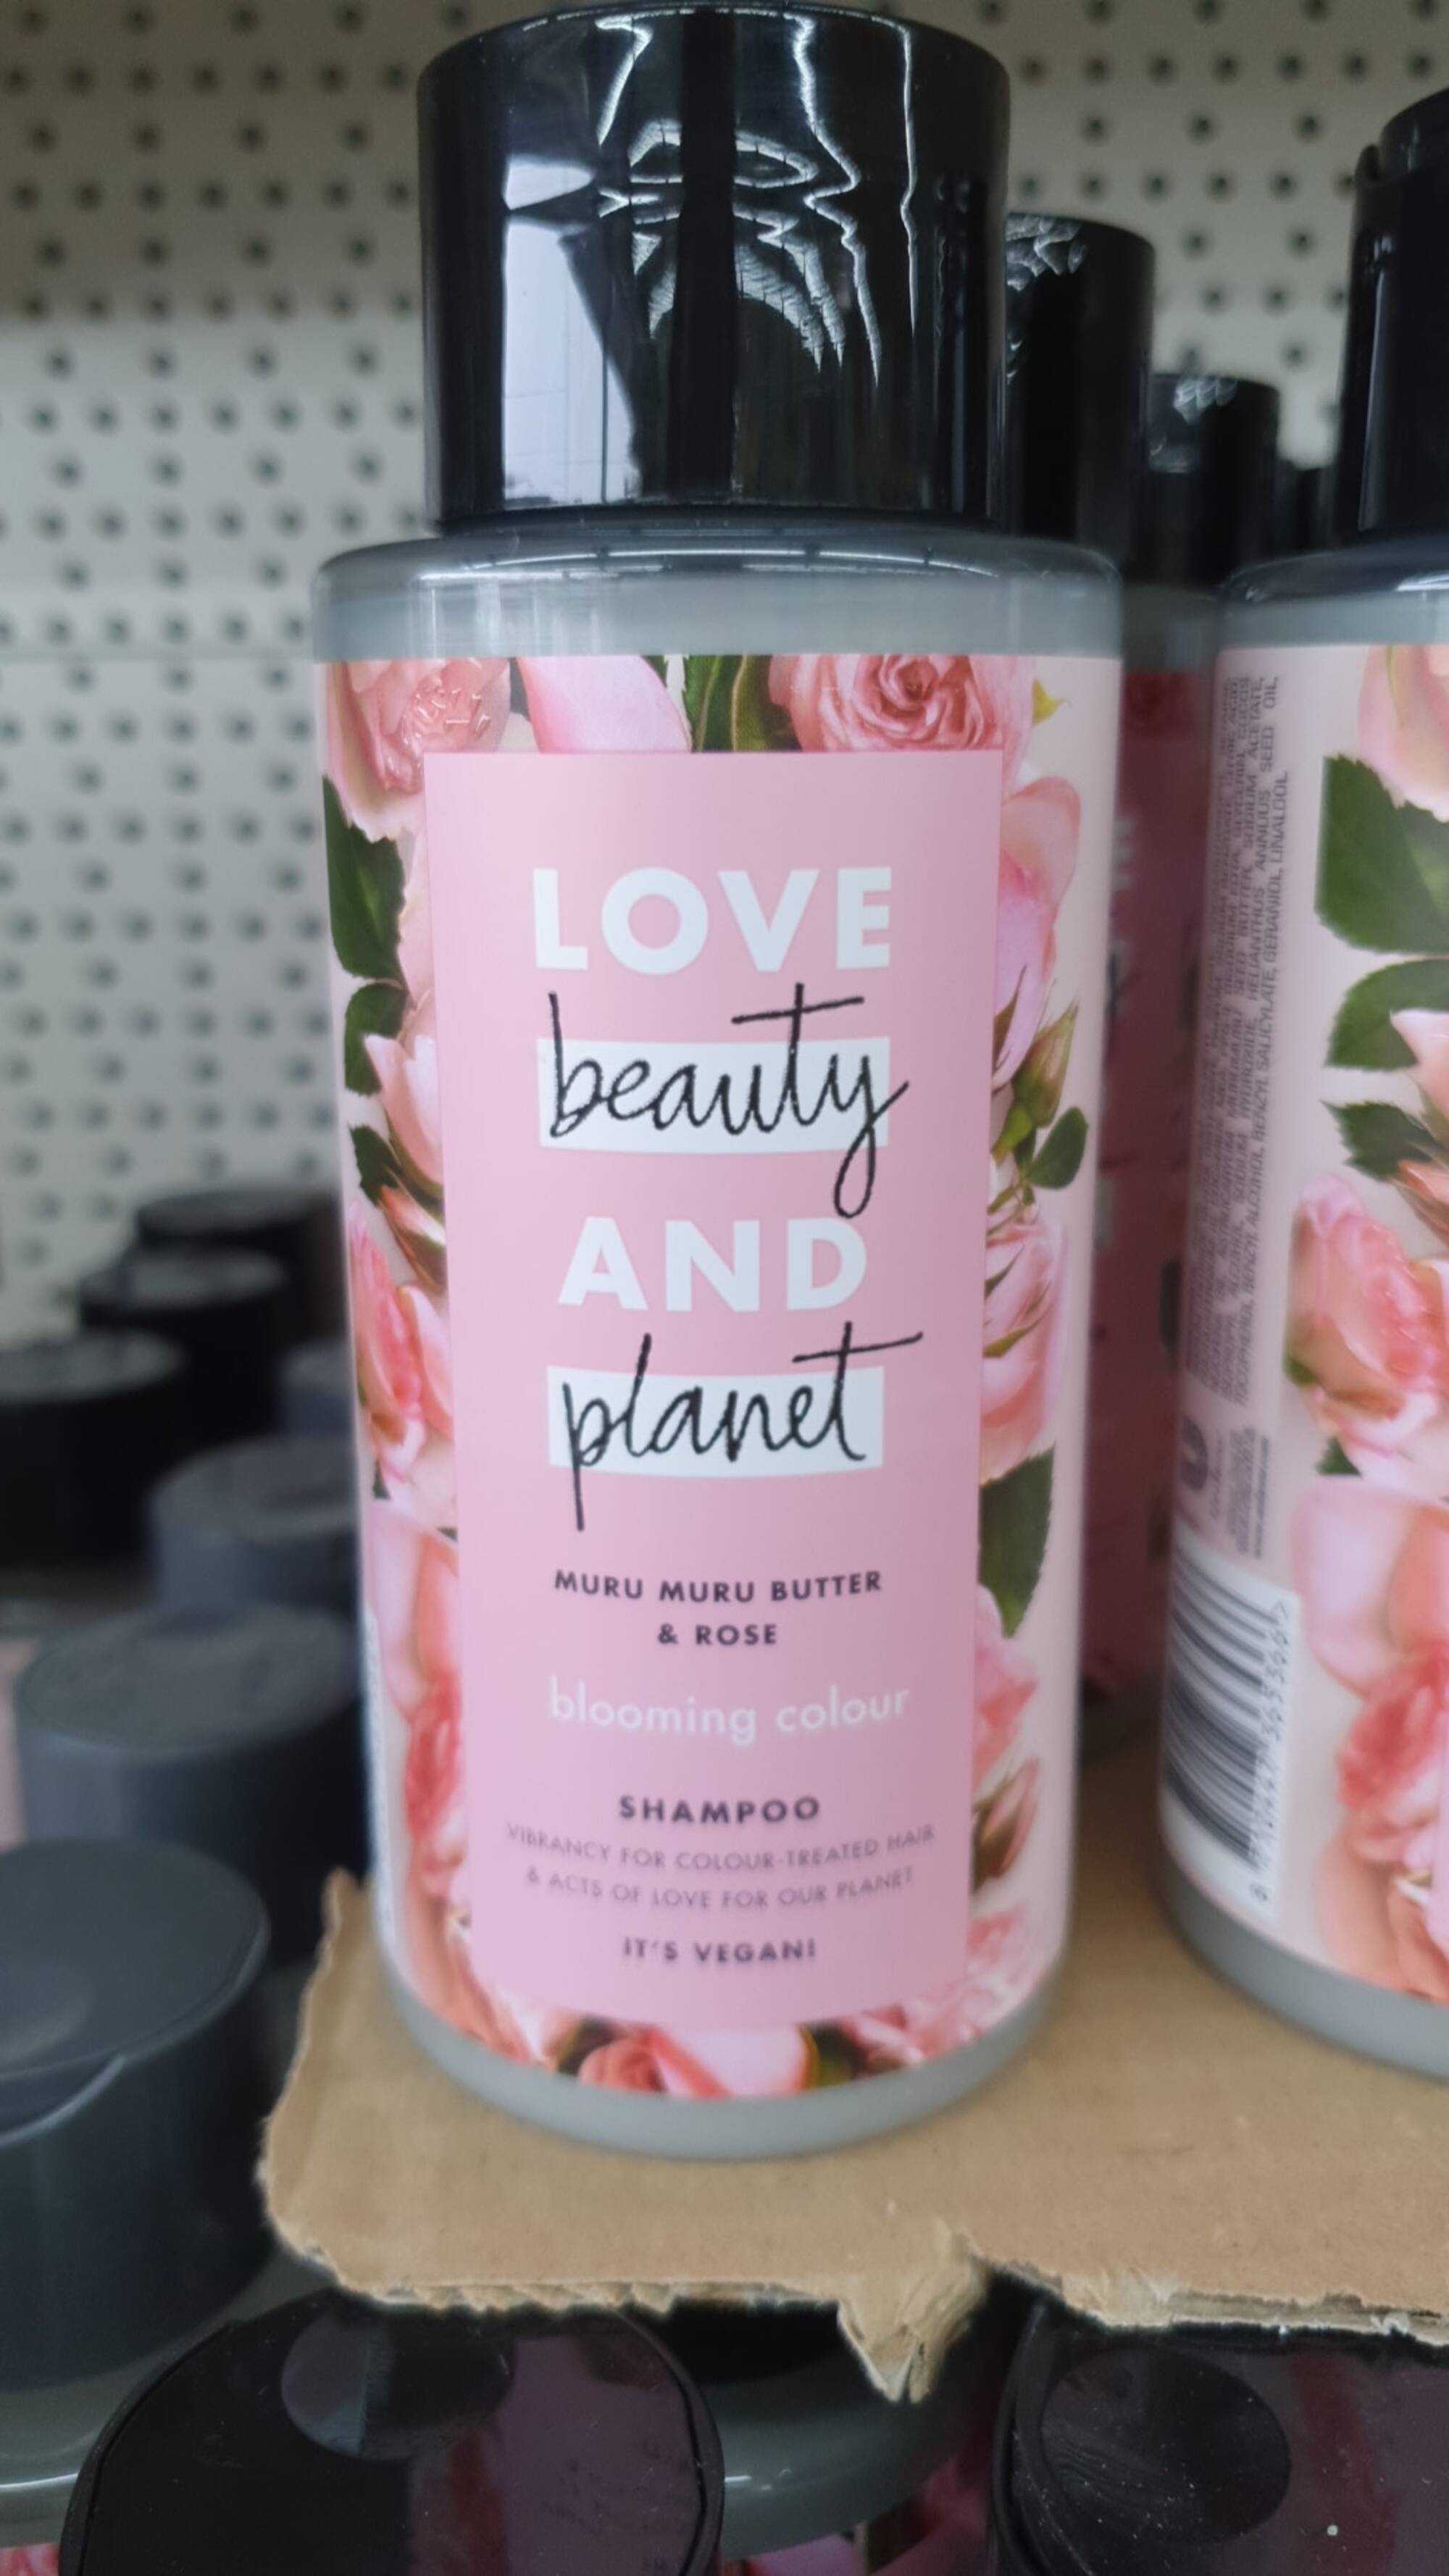 LOVE BEAUTY AND PLANET - Muru Muru Butter & Rose - Blooming colour shampoo